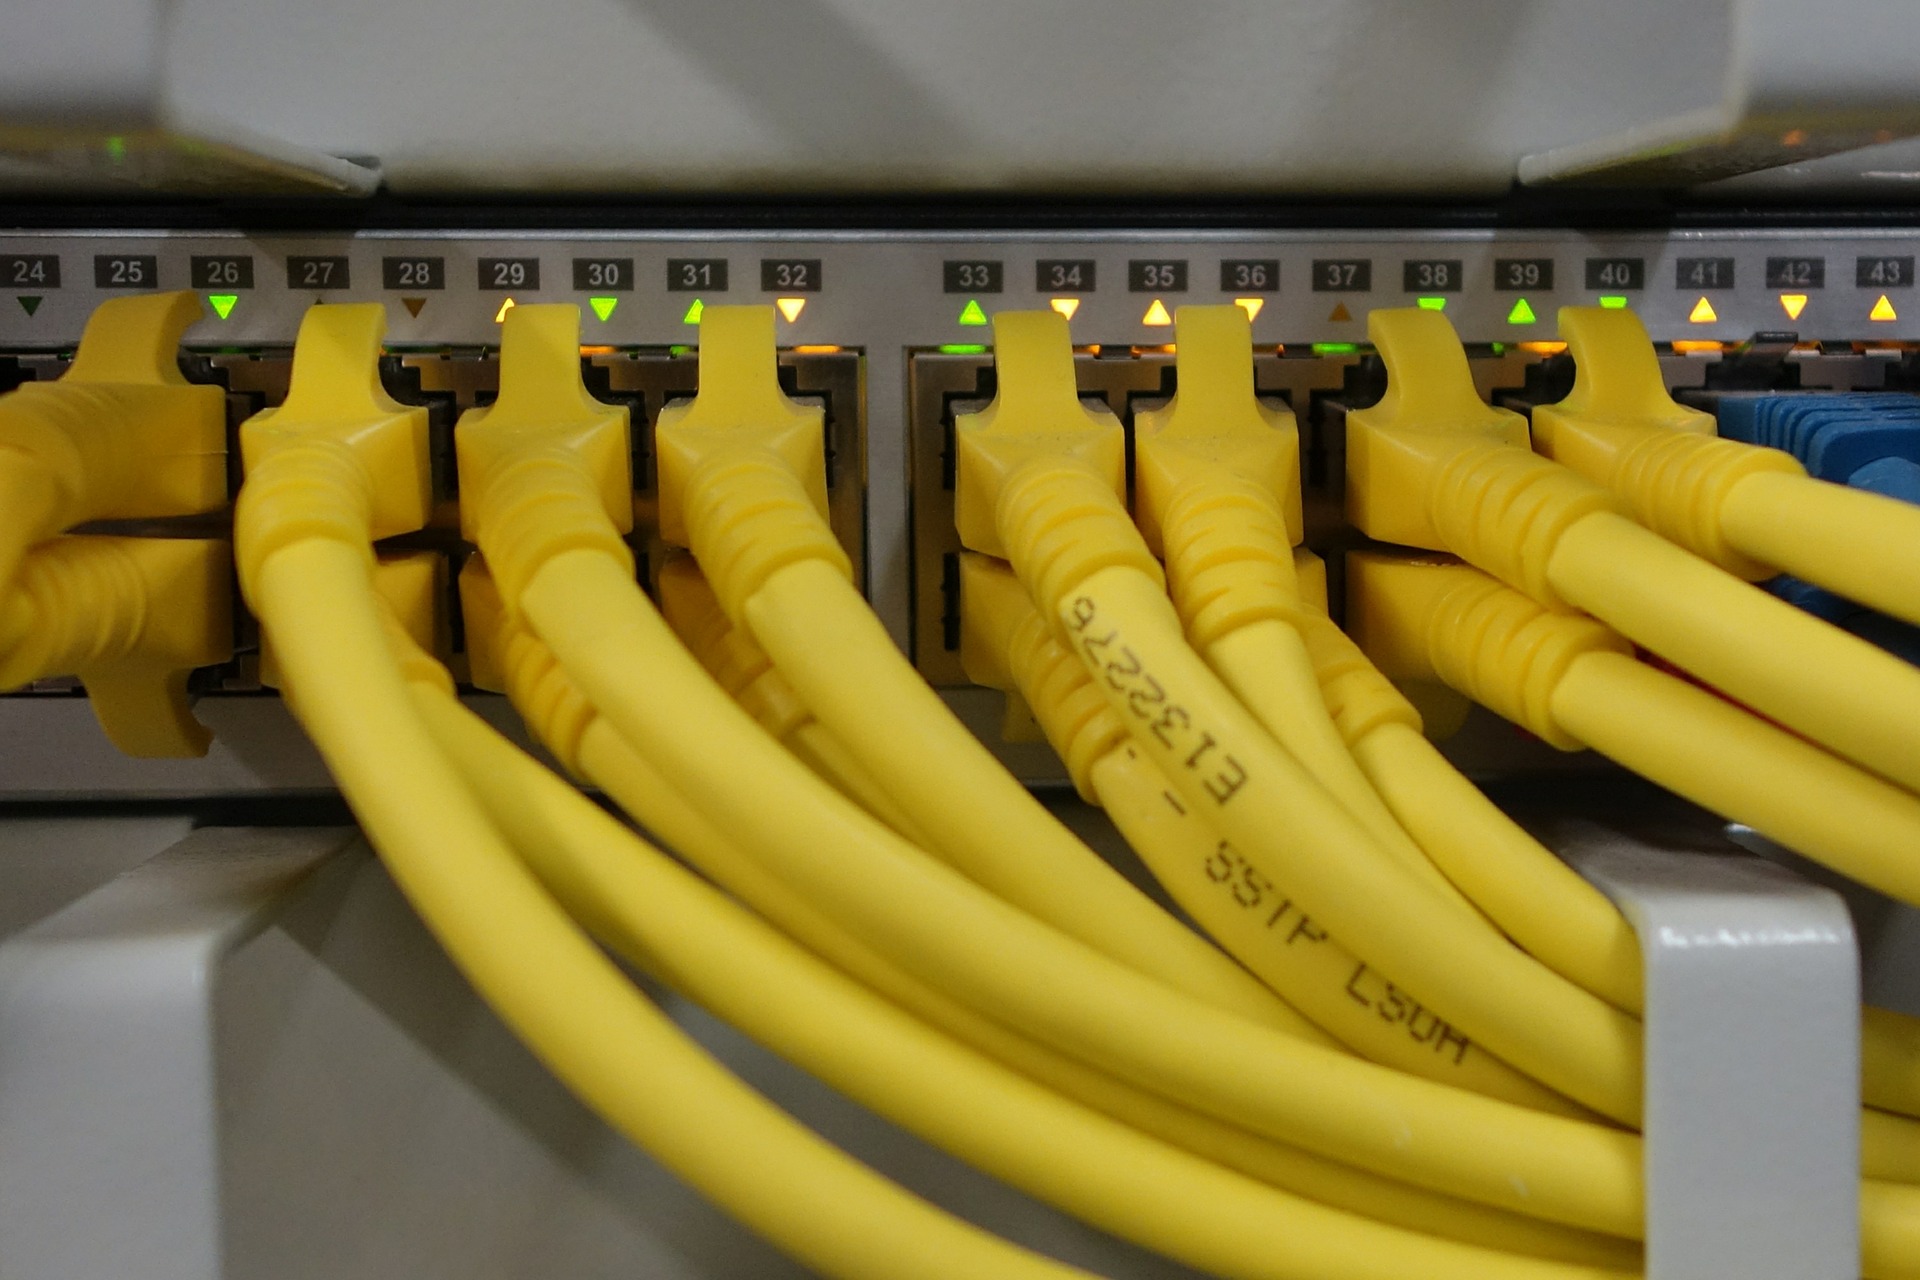 Sieć Ethernet